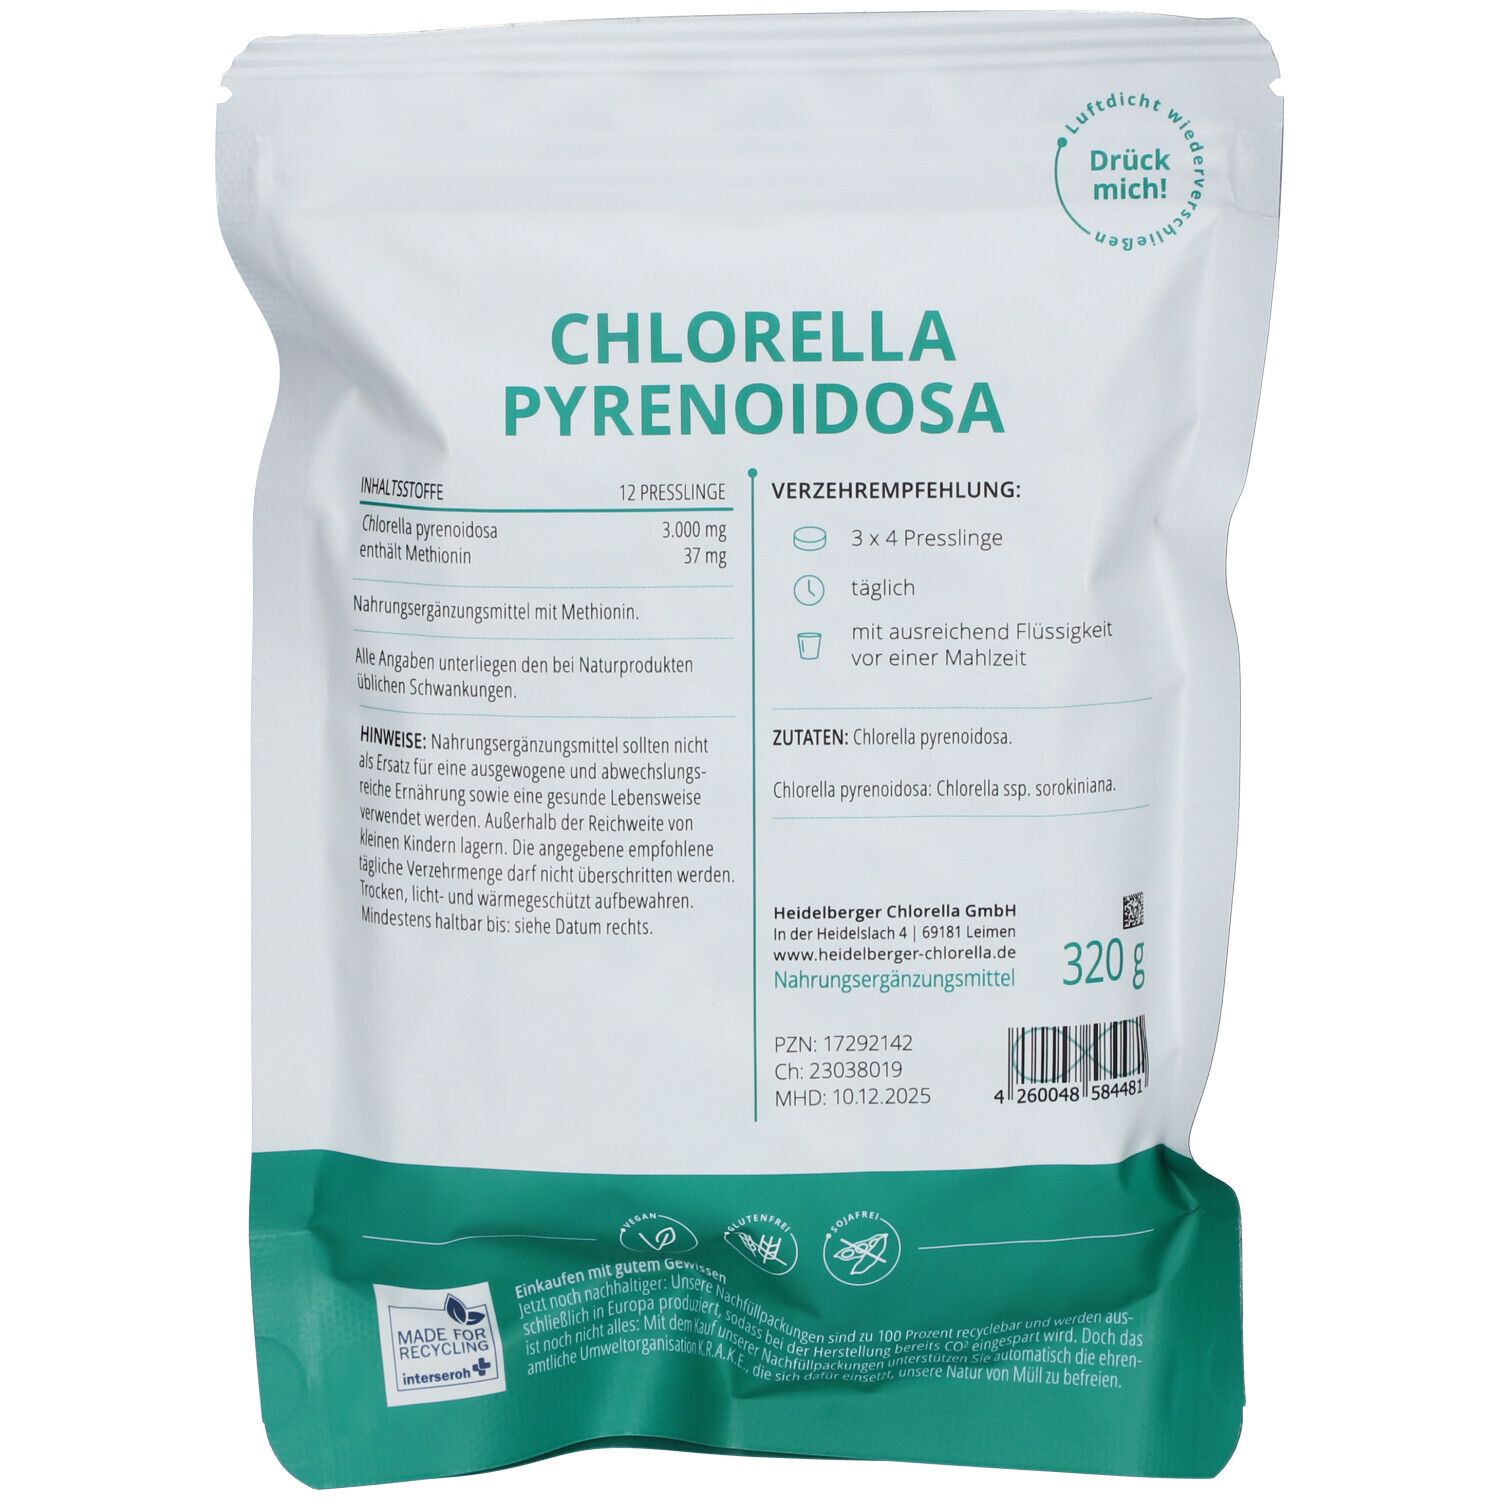 Heidelberger Chlorella Chlorella Pyrenoidosa